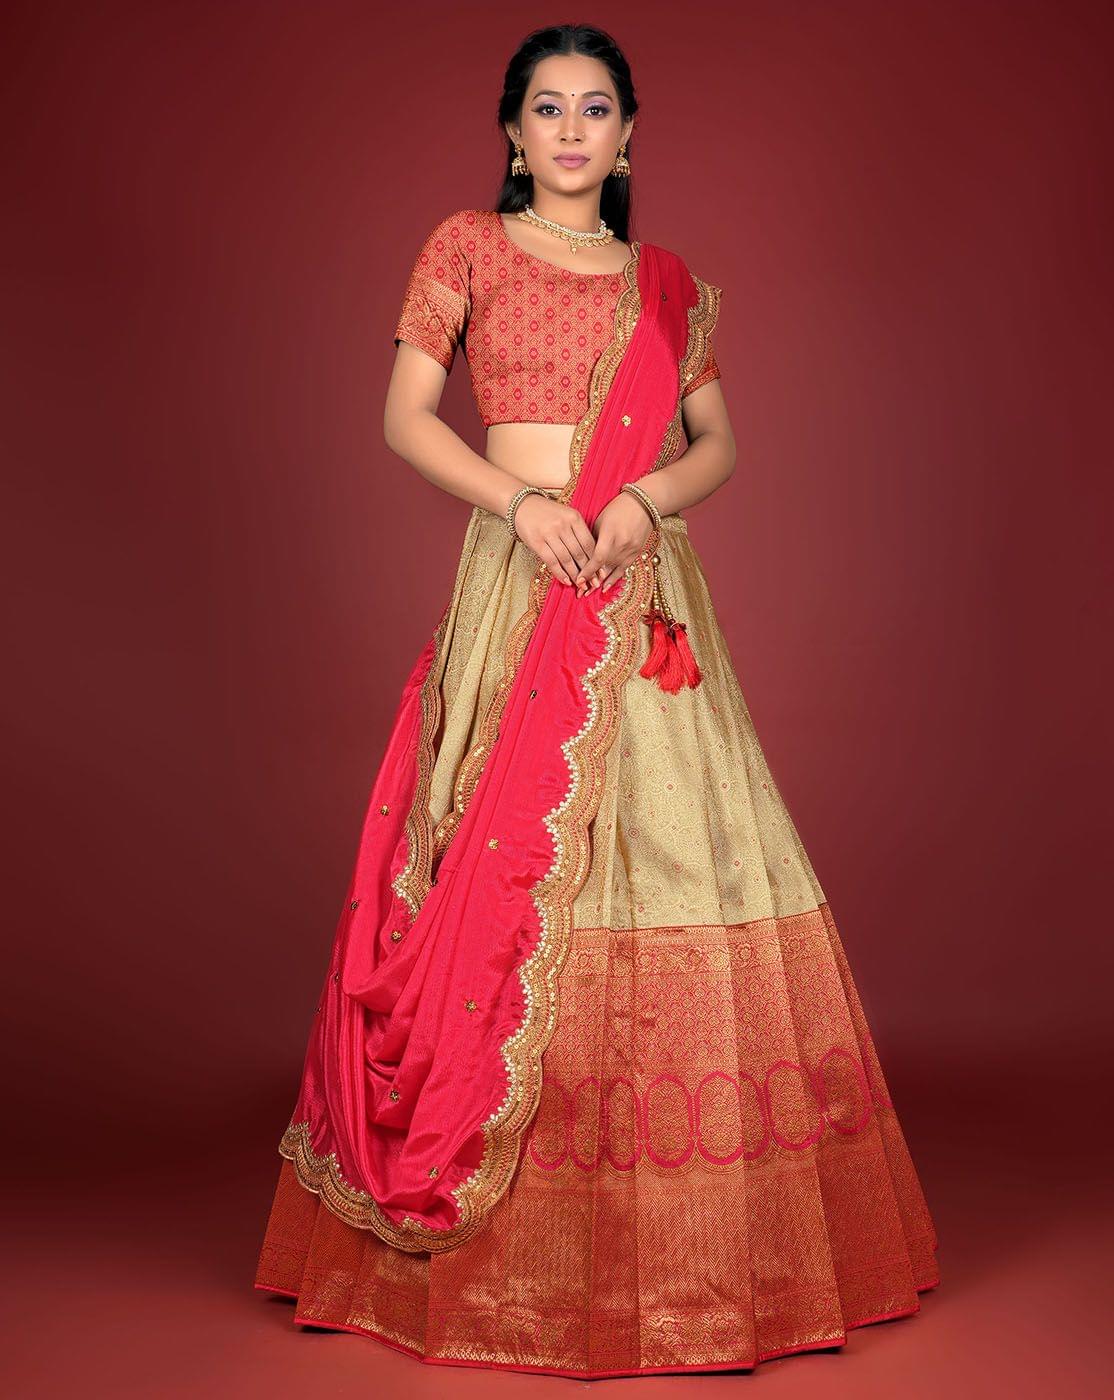 Simple yet elegant... | Half saree designs, Half saree lehenga, Saree dress